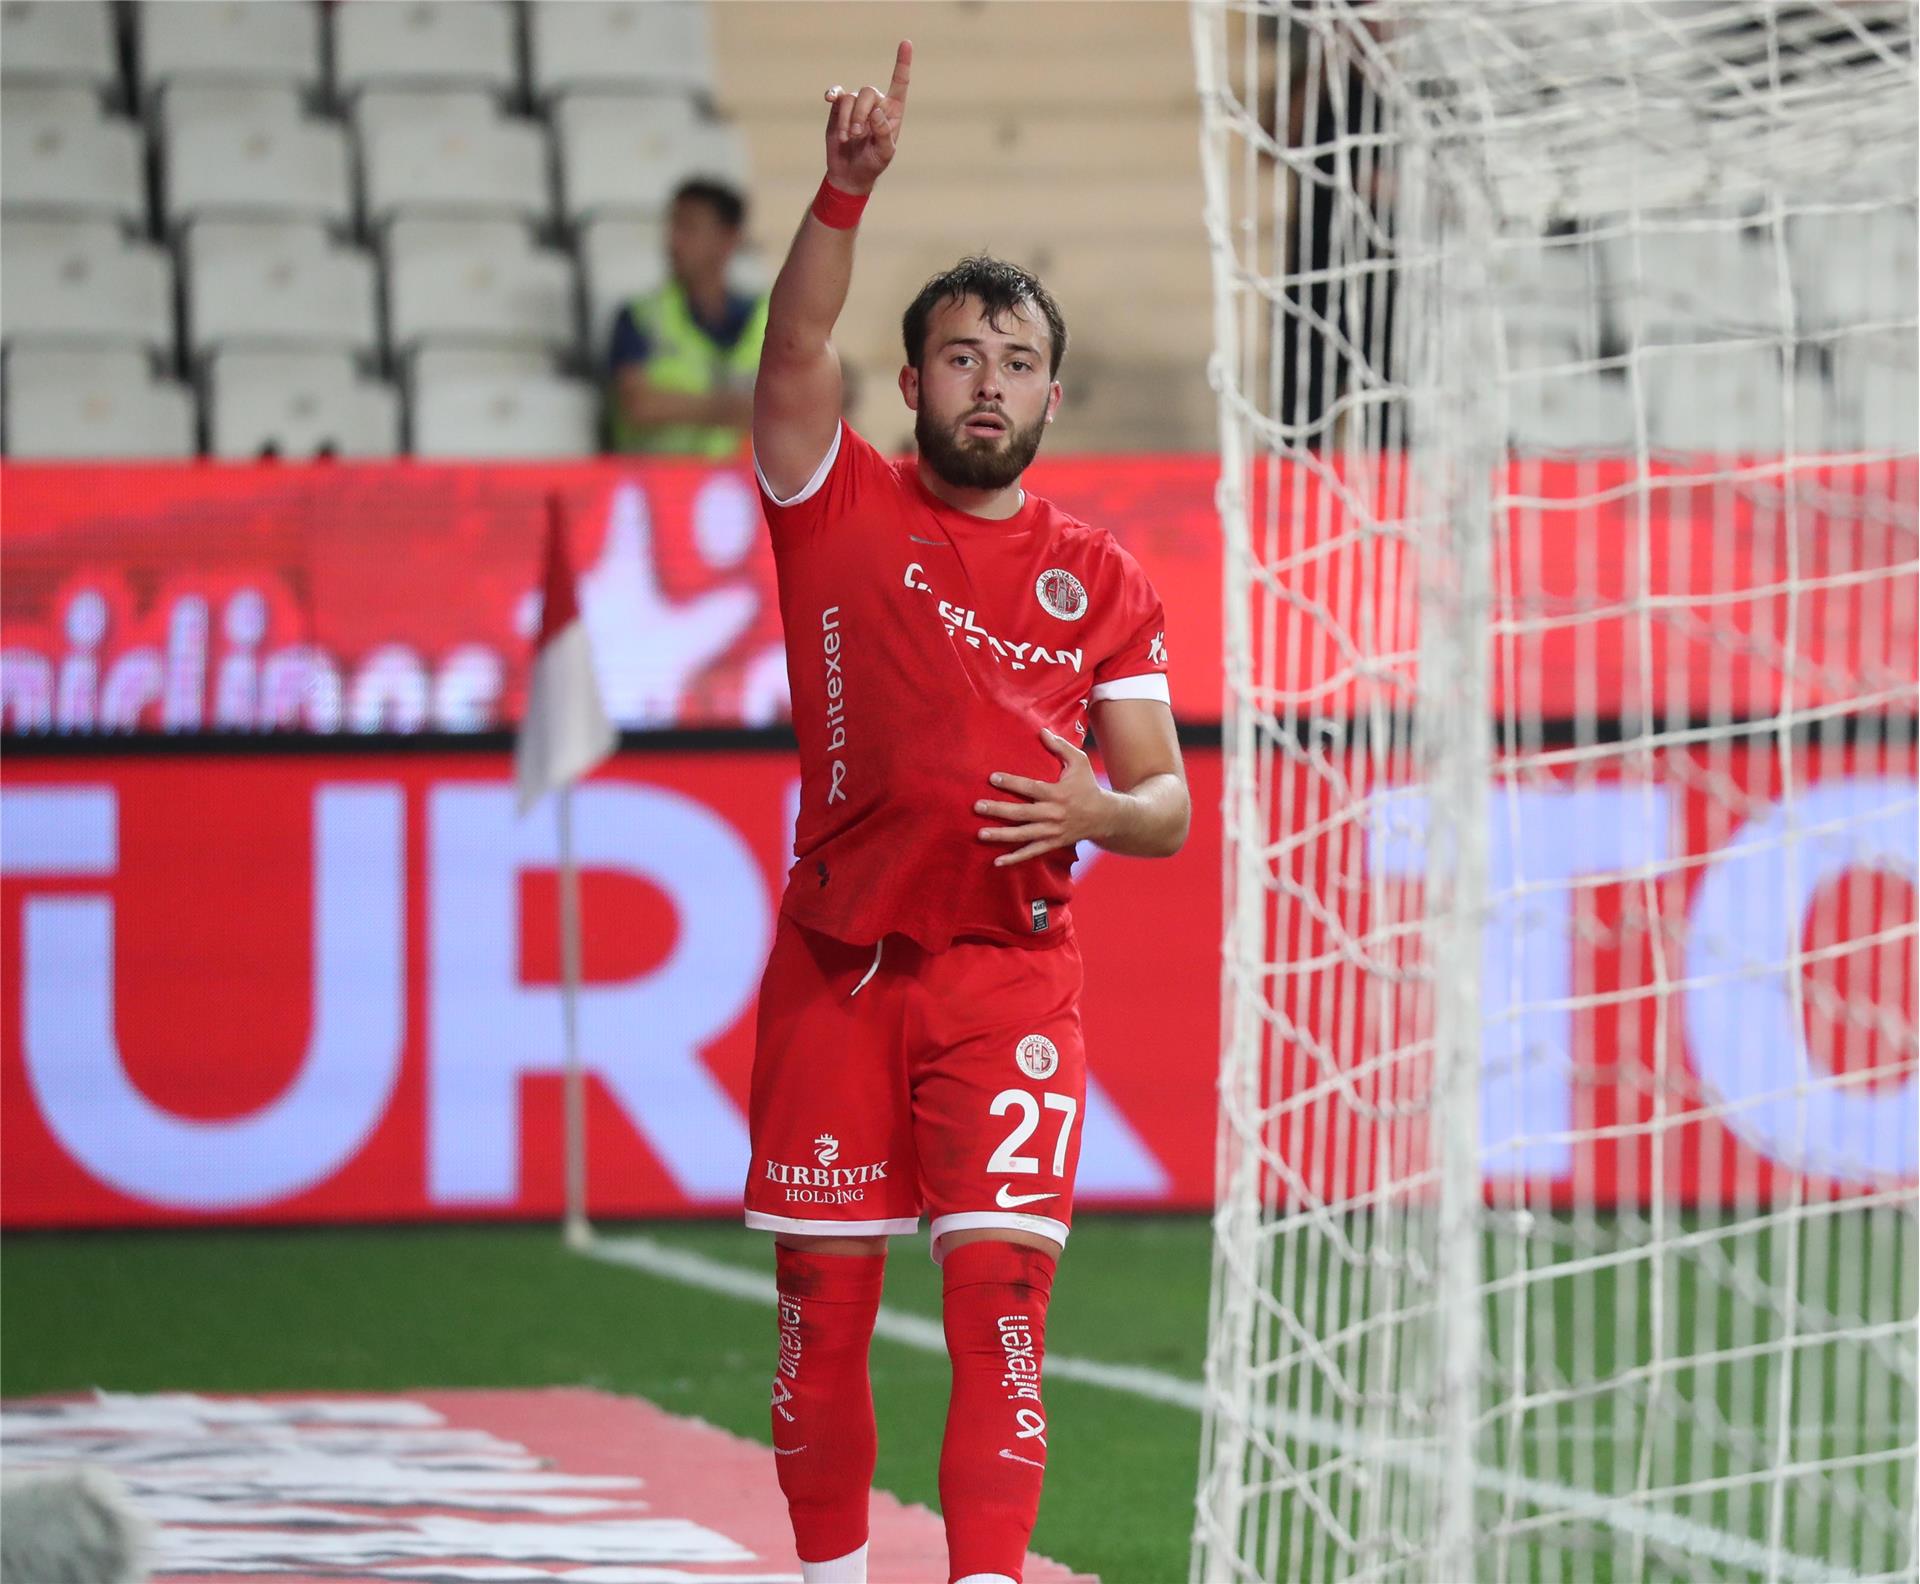 Bitexen Antalyaspor 2-1 Yukatel Adana Demirspor